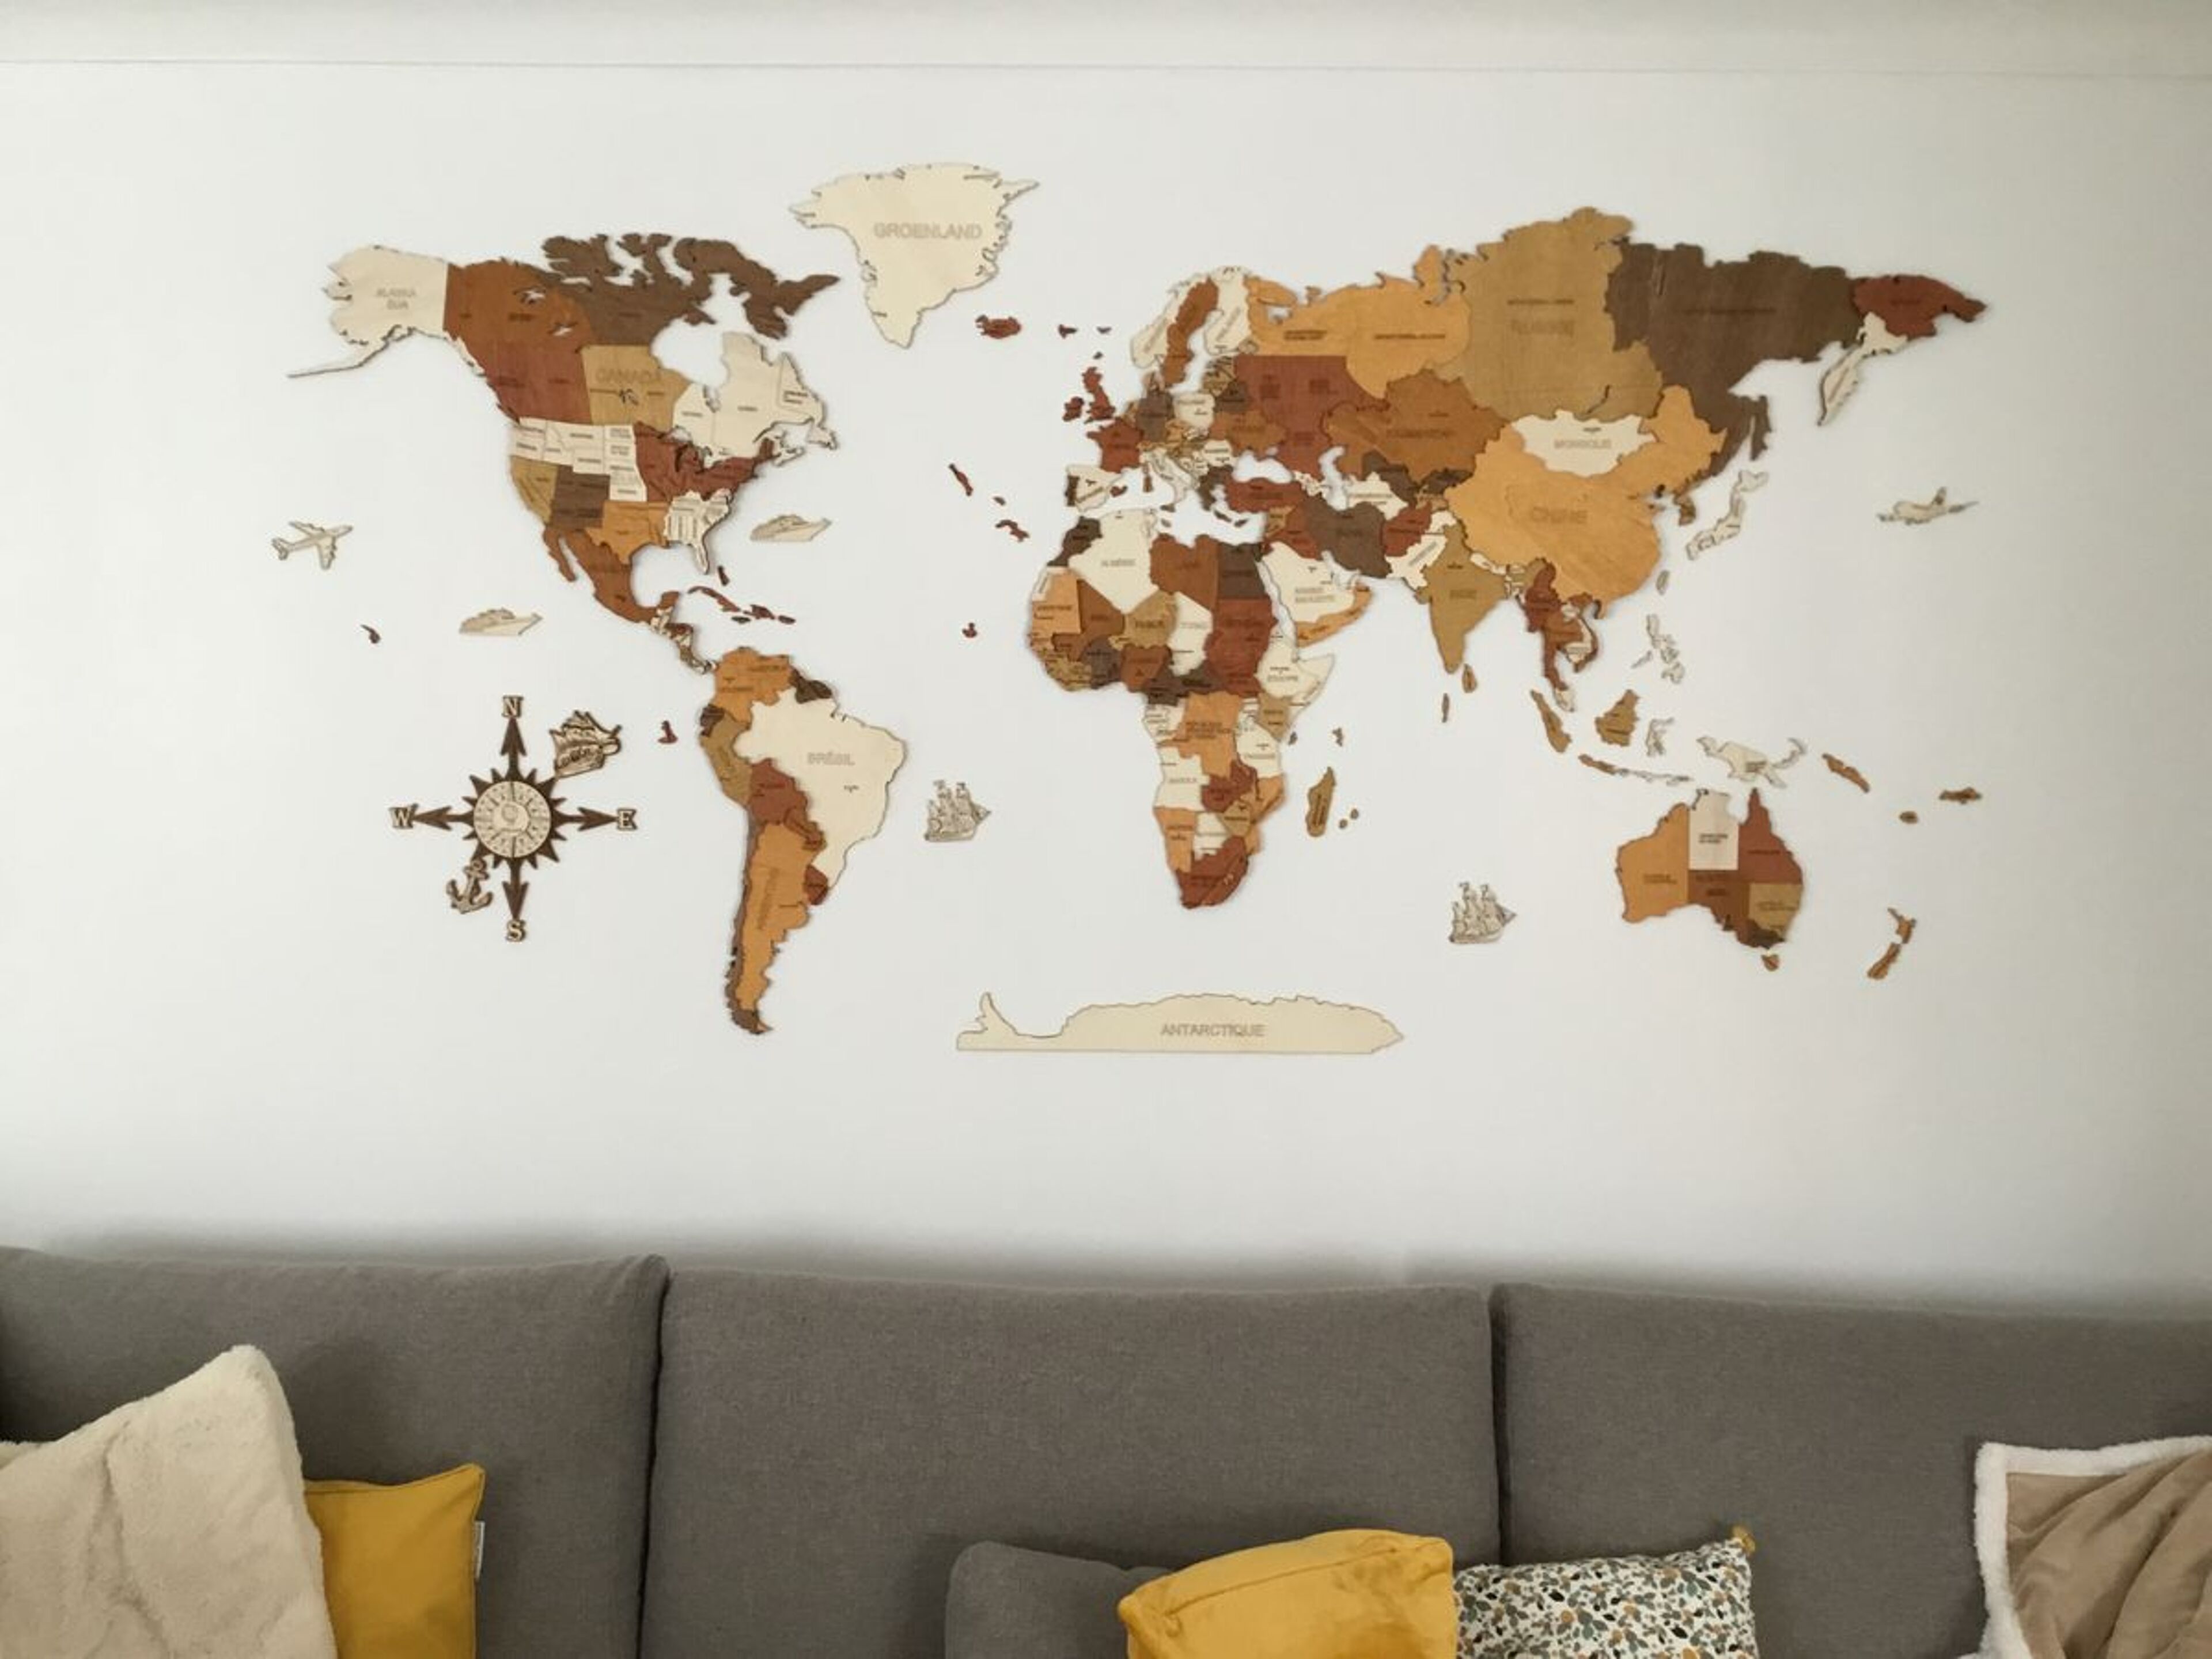 Reseña de Mapa del mundo de madera - imagen de Marie - julienne Schor